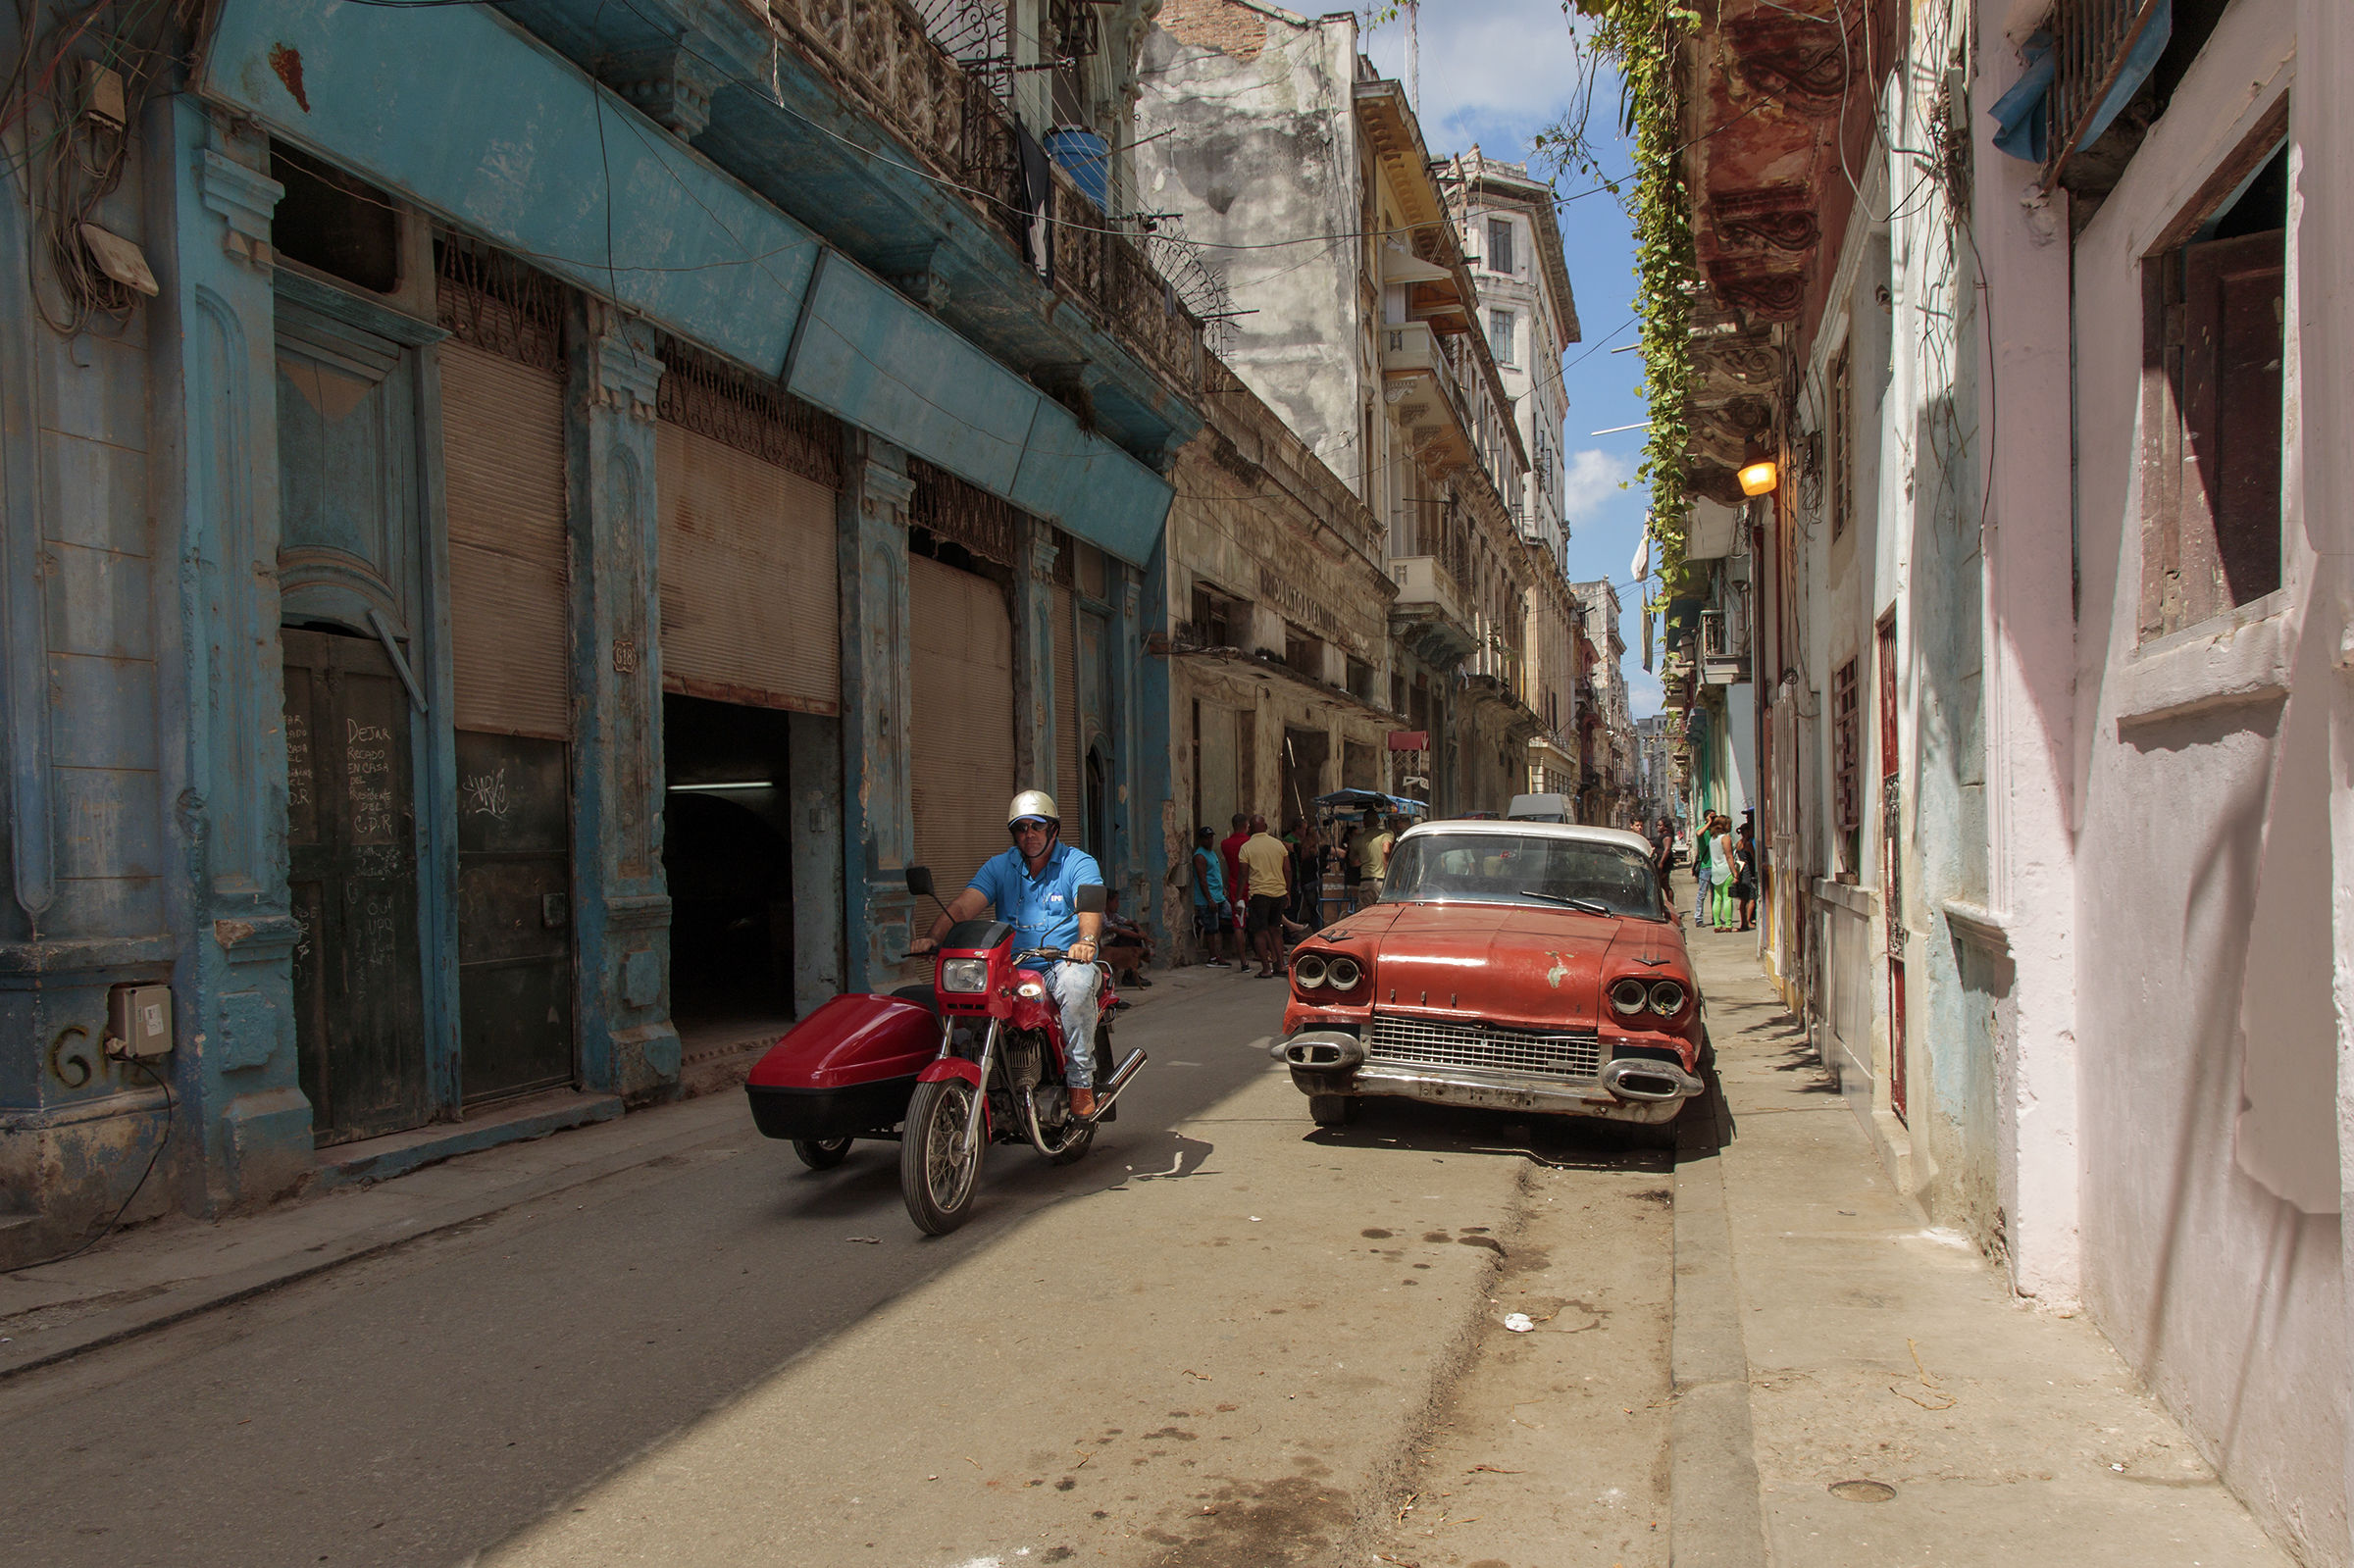 L'Avana fuori dai soliti itinerari turistici....